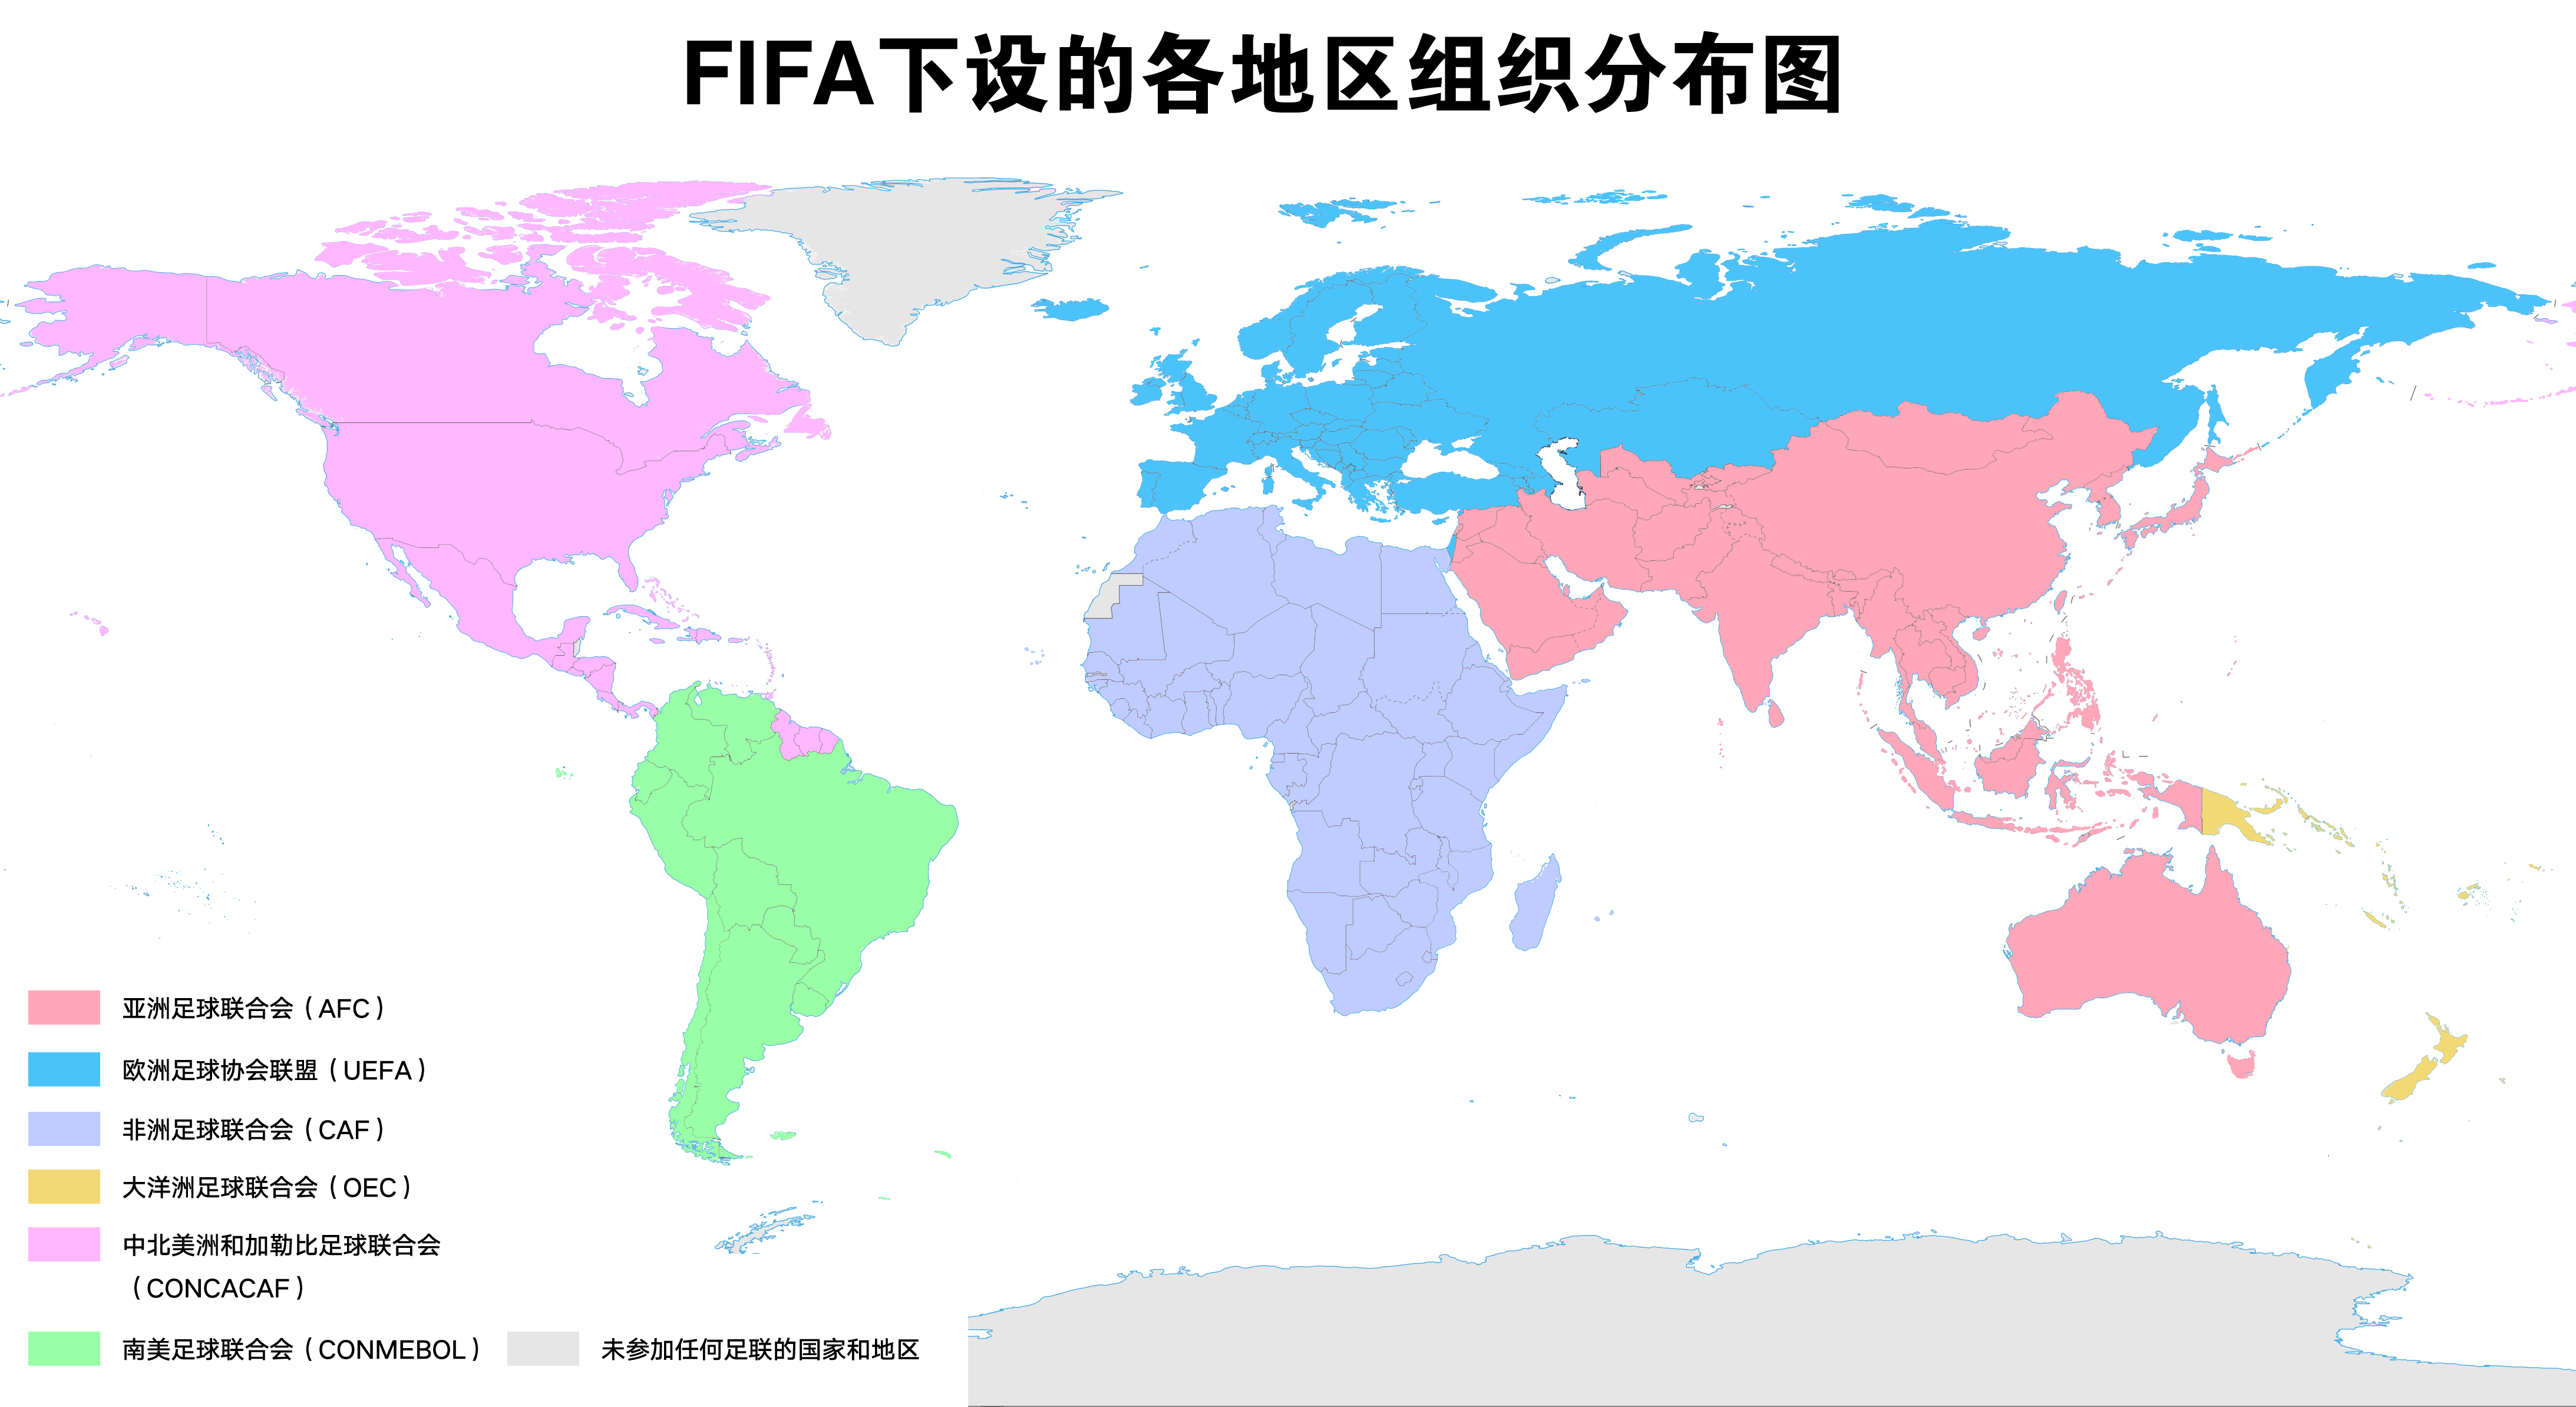 FIFA下設的各地區組織分布圖